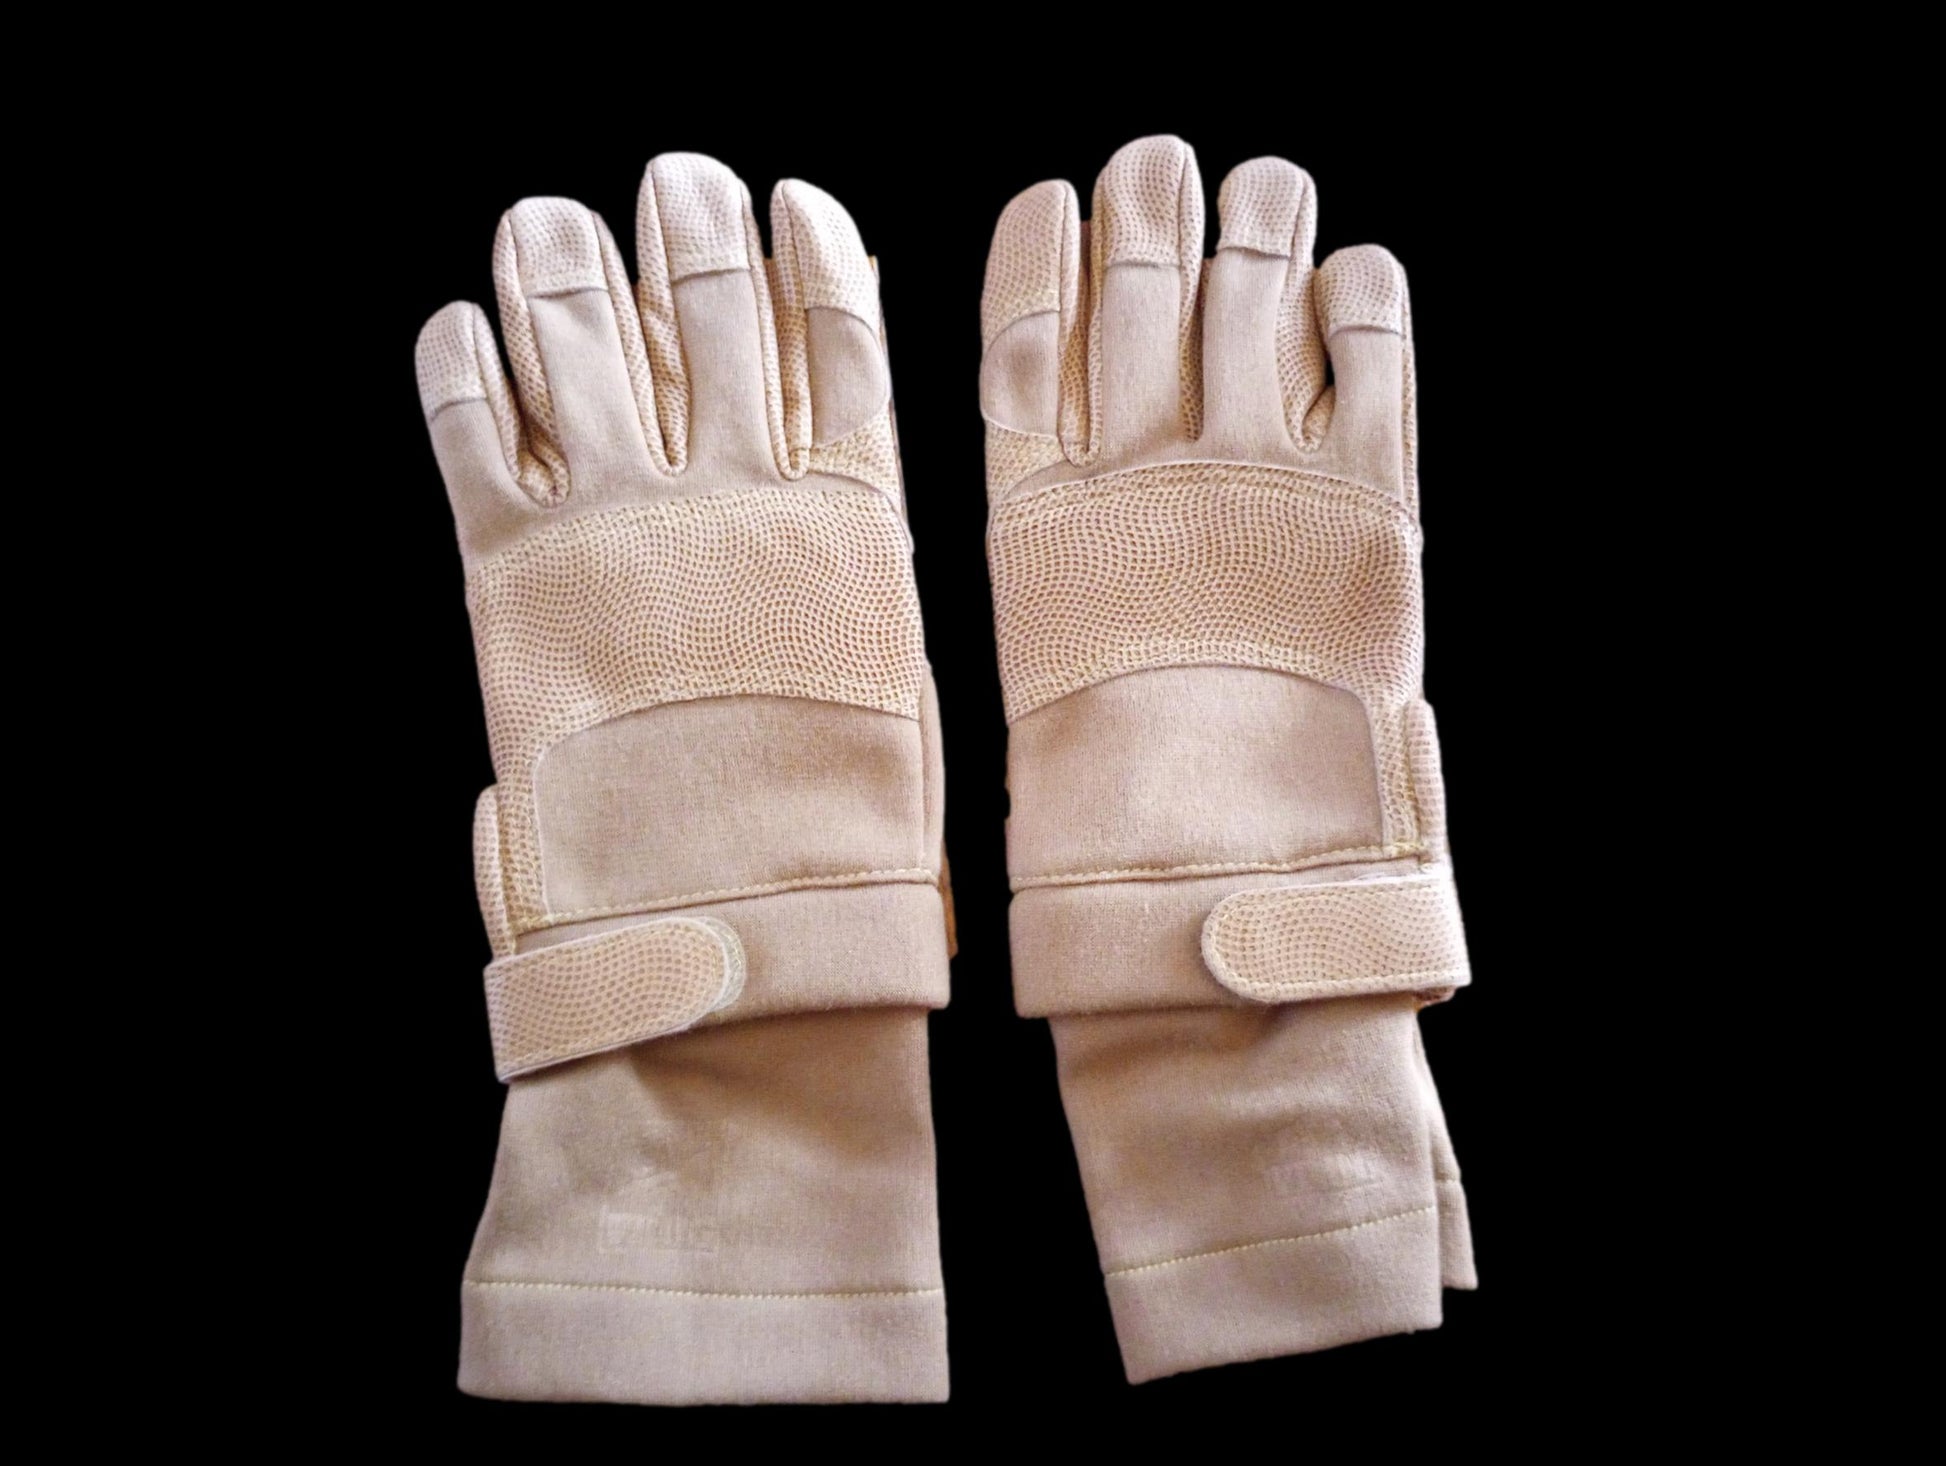 CamelBak Friction Fighter Nomex Max Grip NT Gloves – Glenn's Army